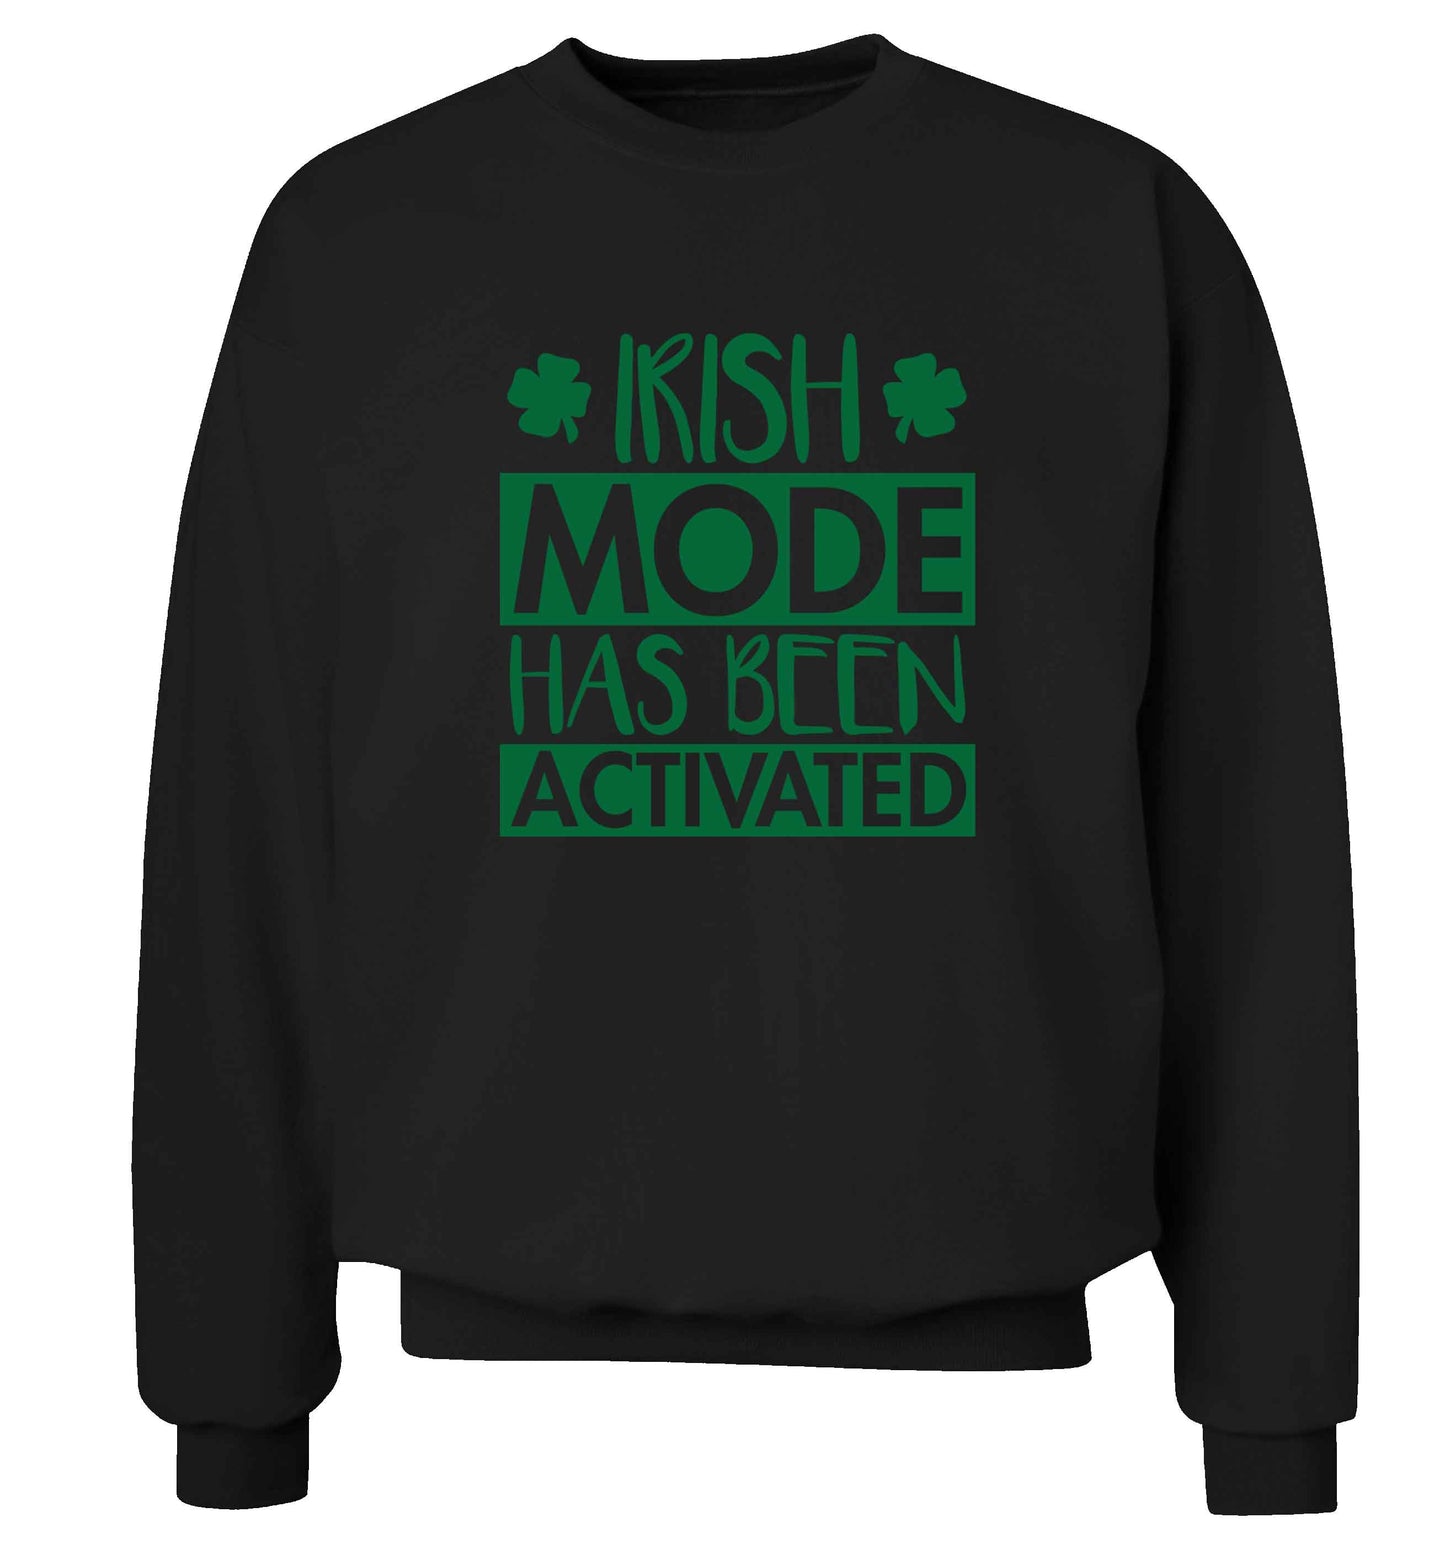 Irish mode has been activated adult's unisex black sweater 2XL